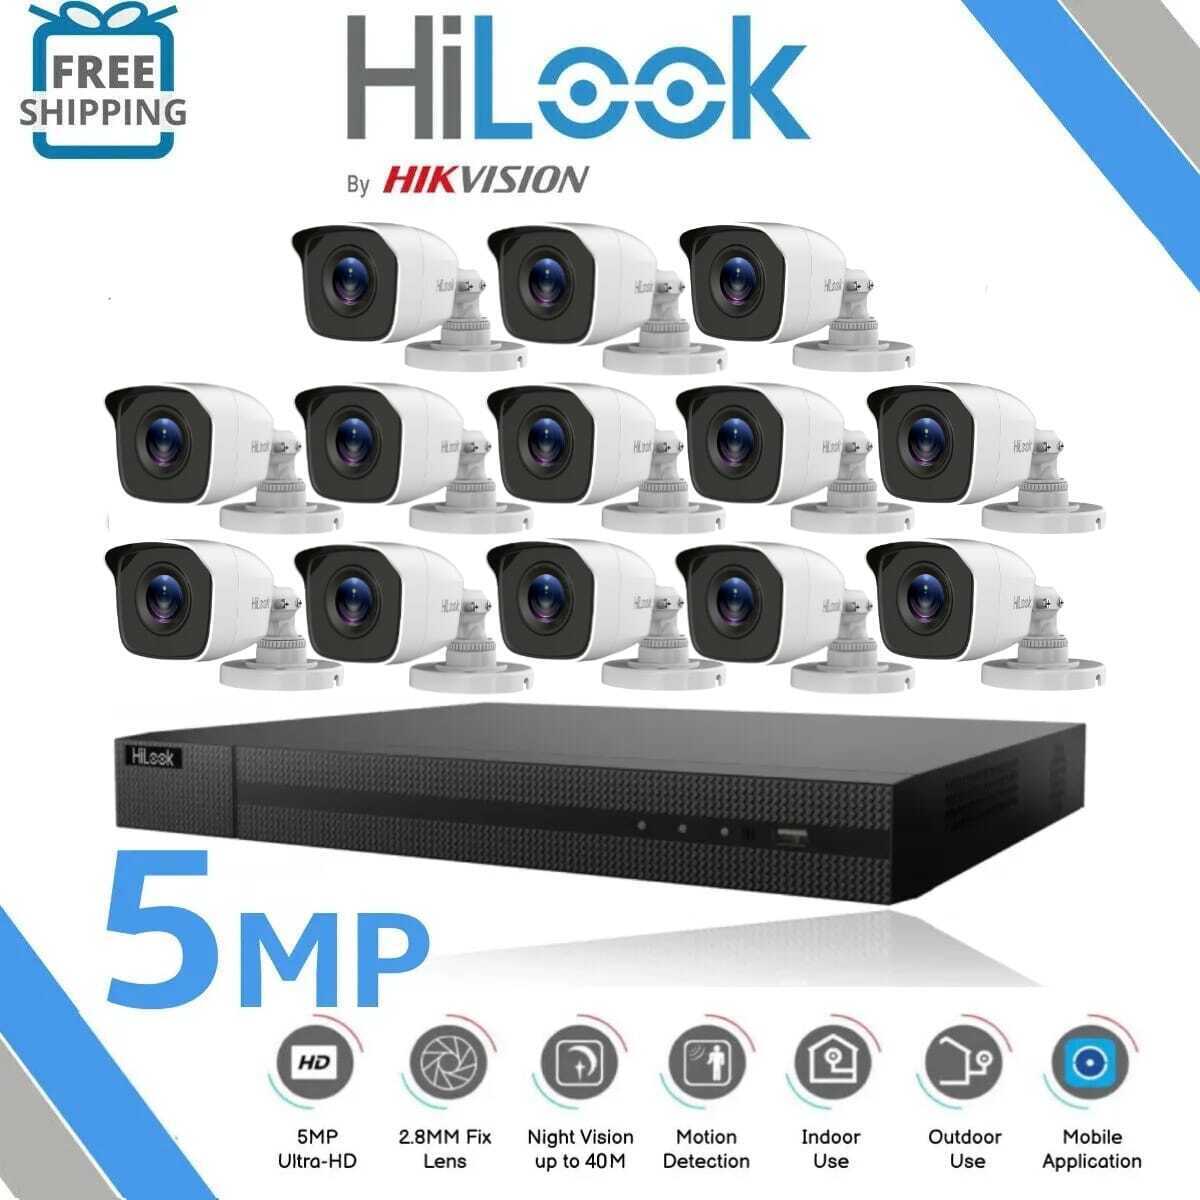 HIKVISION CCTV SYSTEM 5MP CAMERA FULL HD 40M NIGHT VISION OUTDOOR KIT 16CH DVR 13x Cameras (white) 4TB HDD